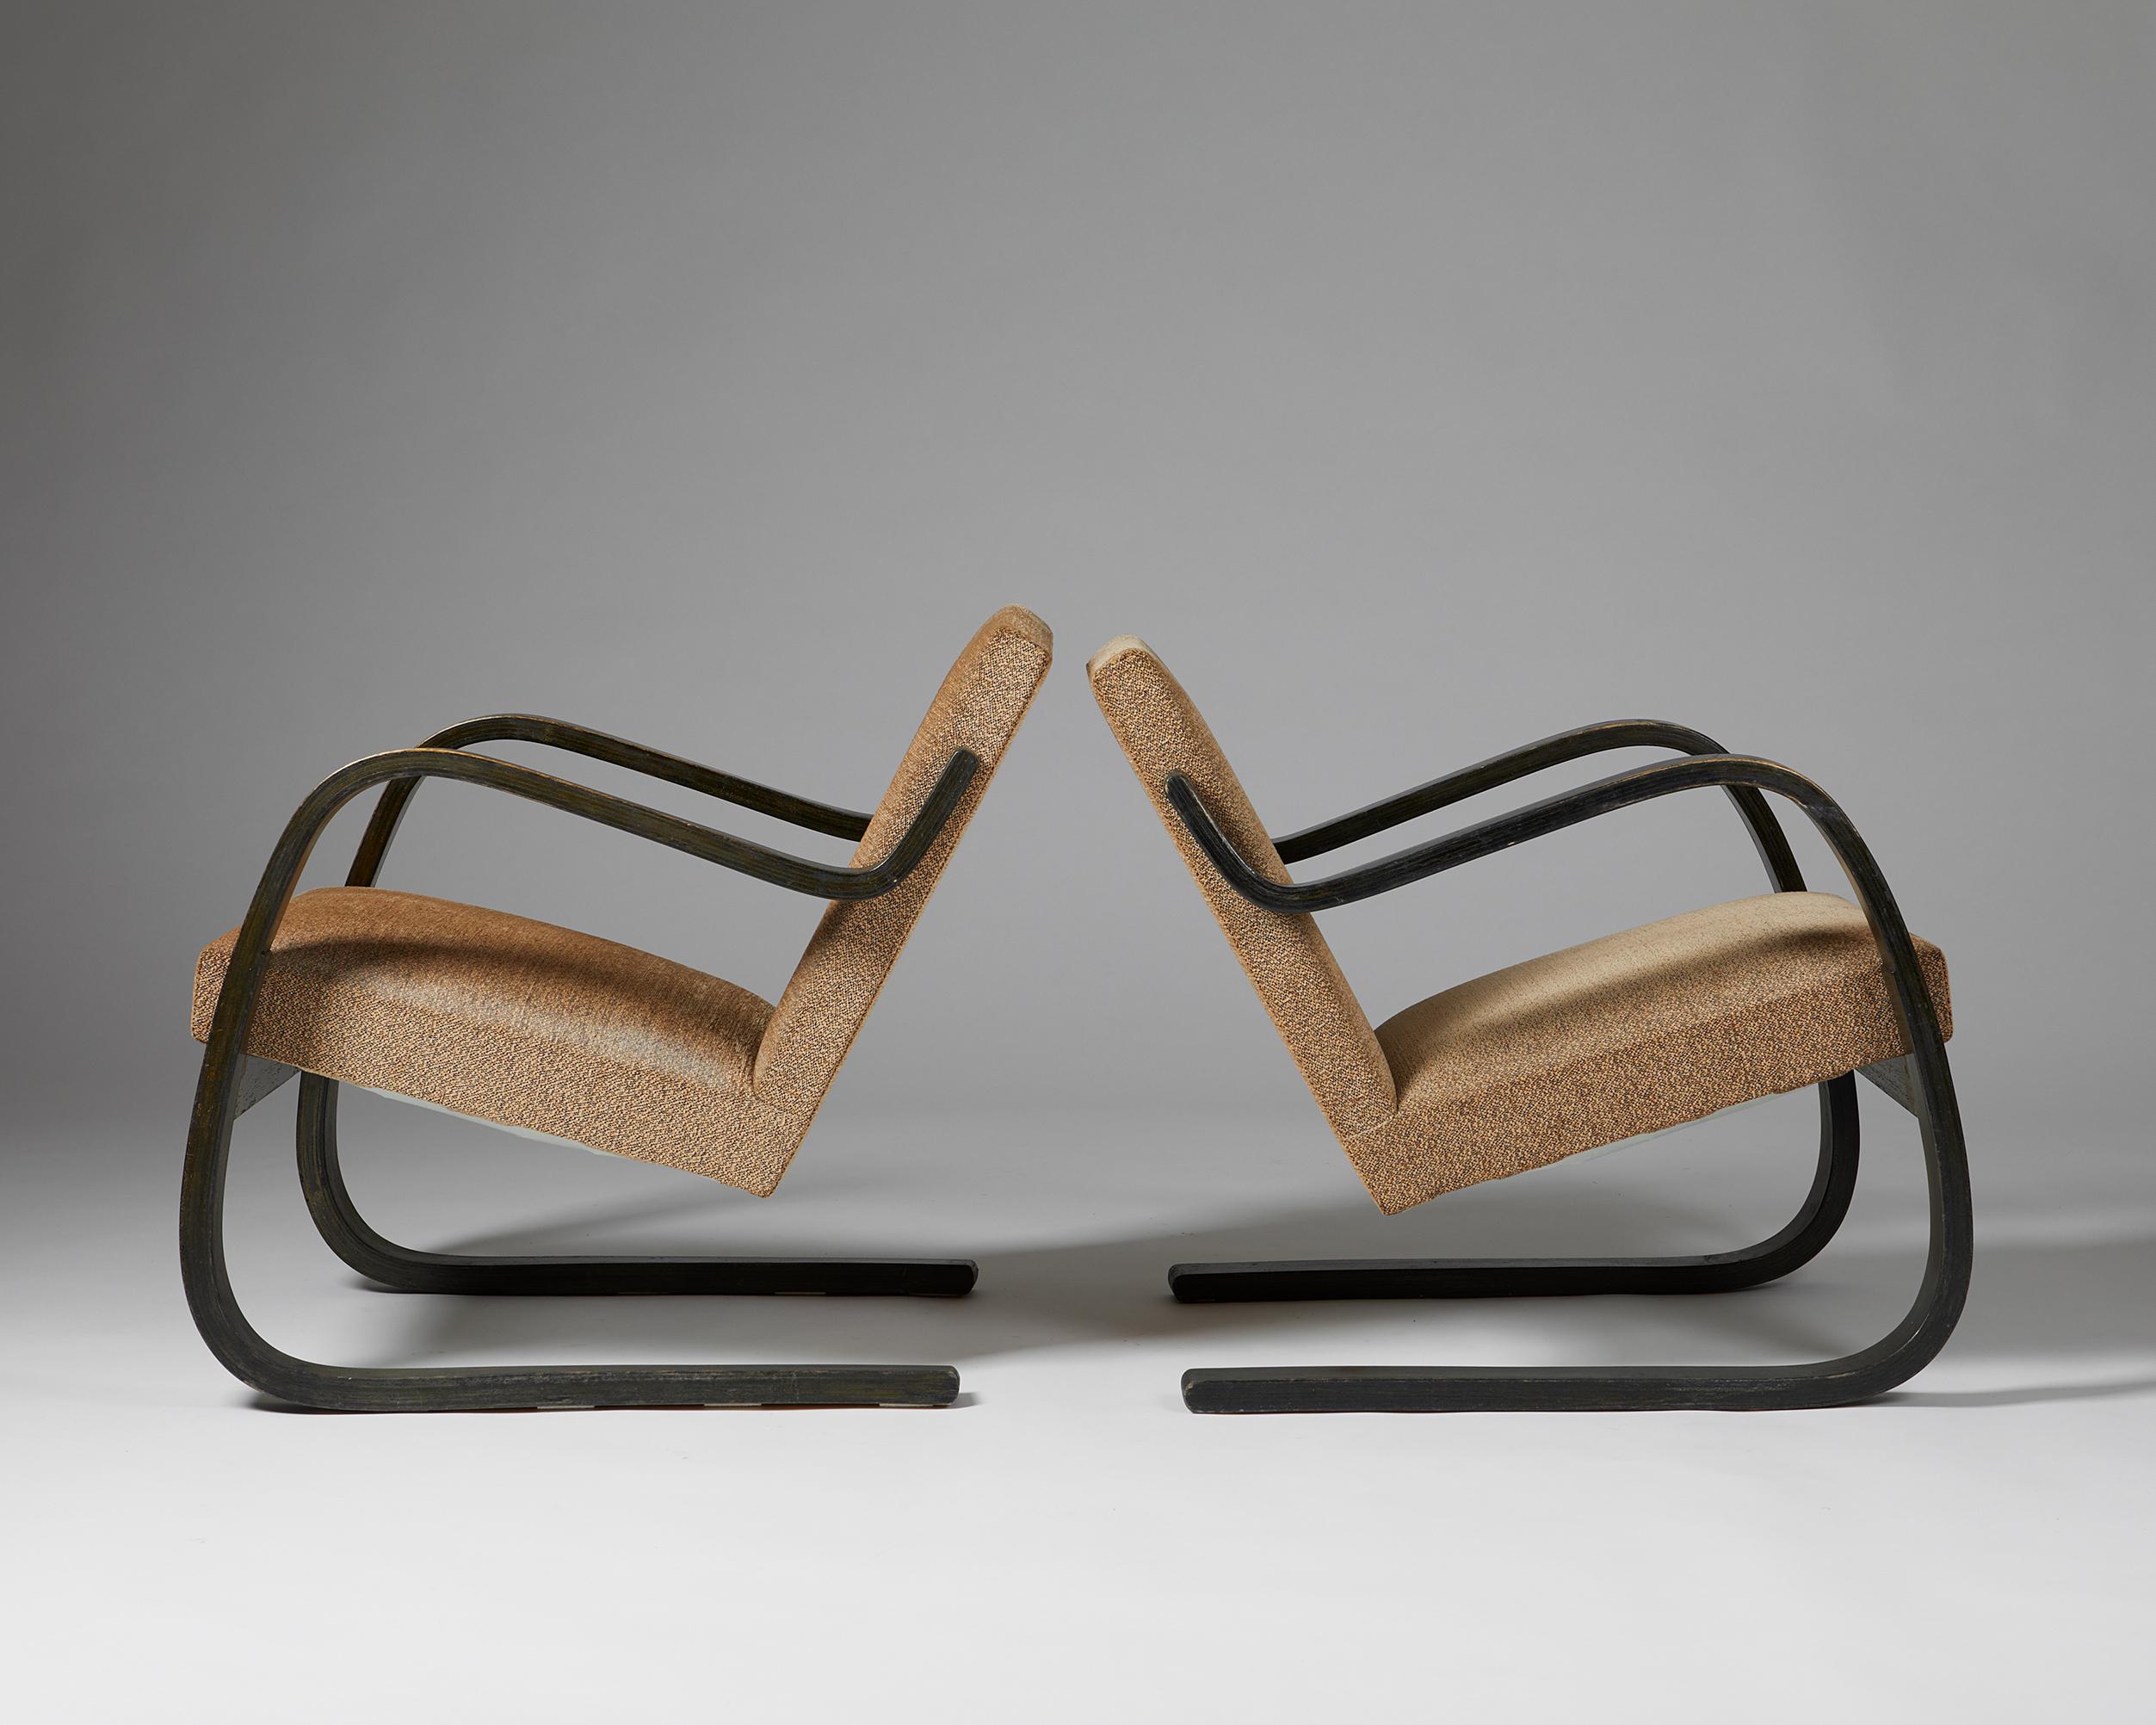 Pair of Chairs ‘Model 34’ Designed by Alvar Aalto for Artek, Finland, 1930's 1